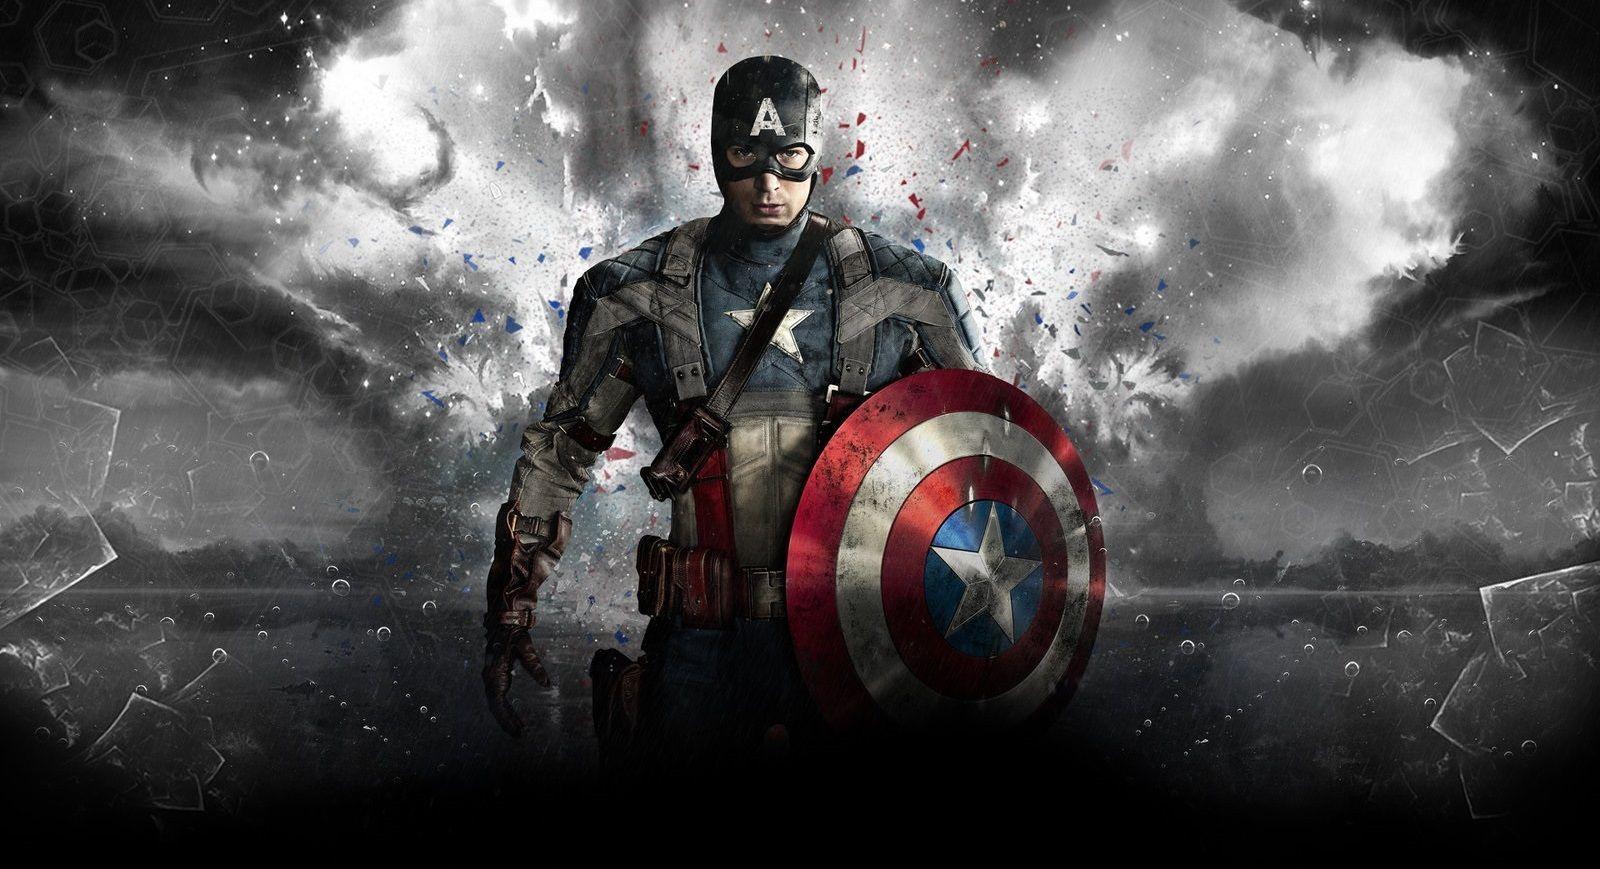 Captain America Wallpaper Free Download. Captain america